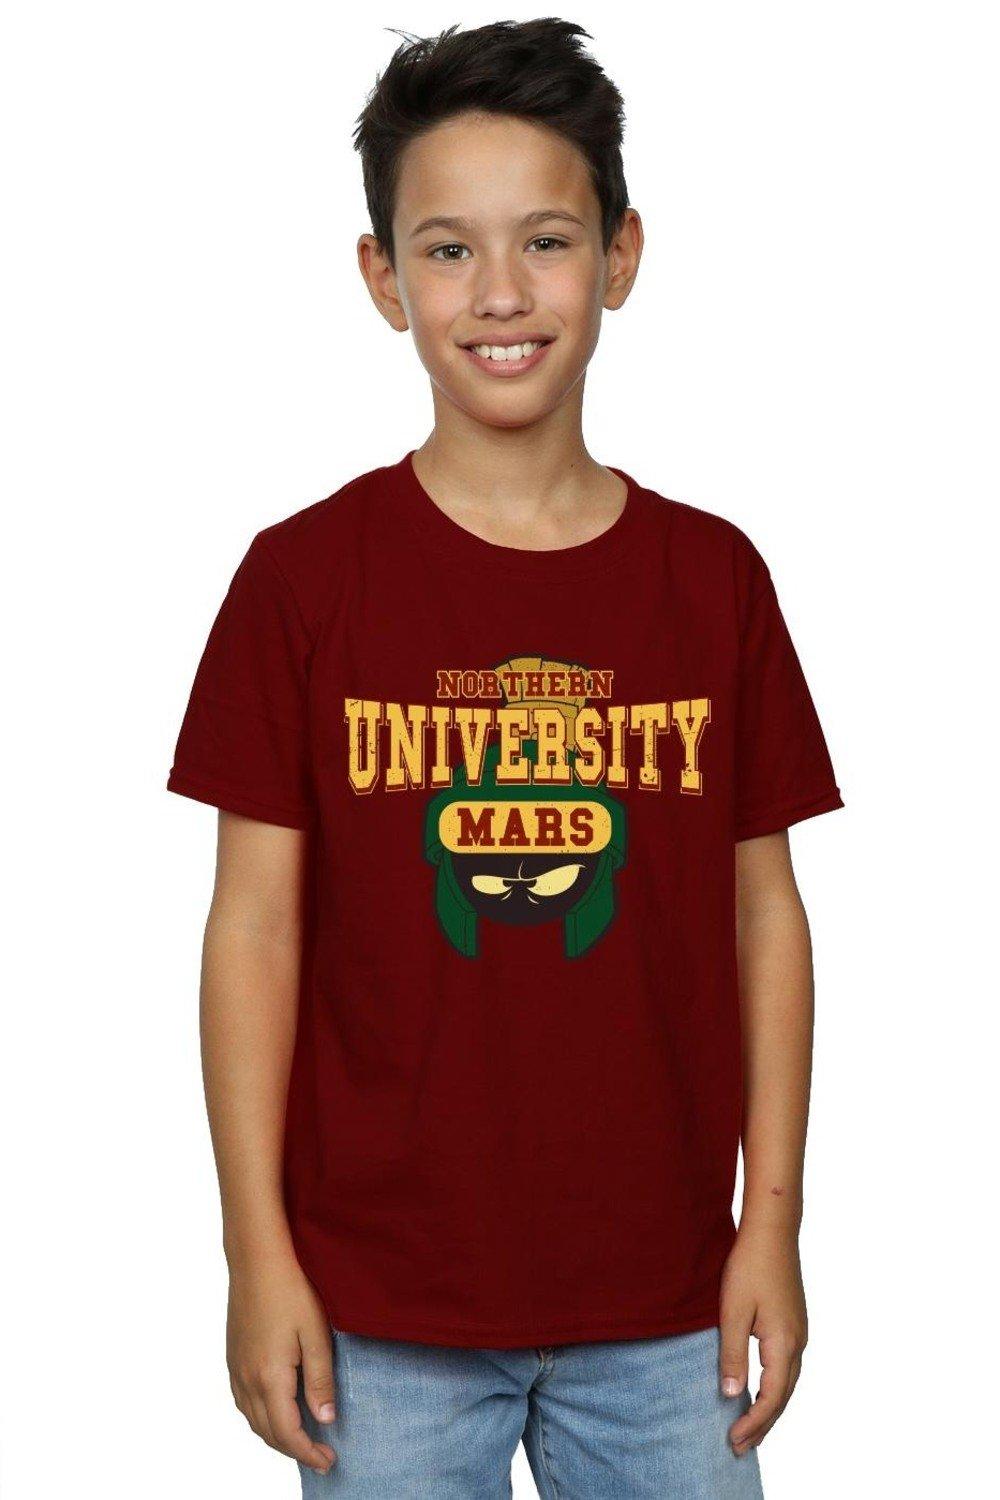 Northern University Of Mars T-Shirt